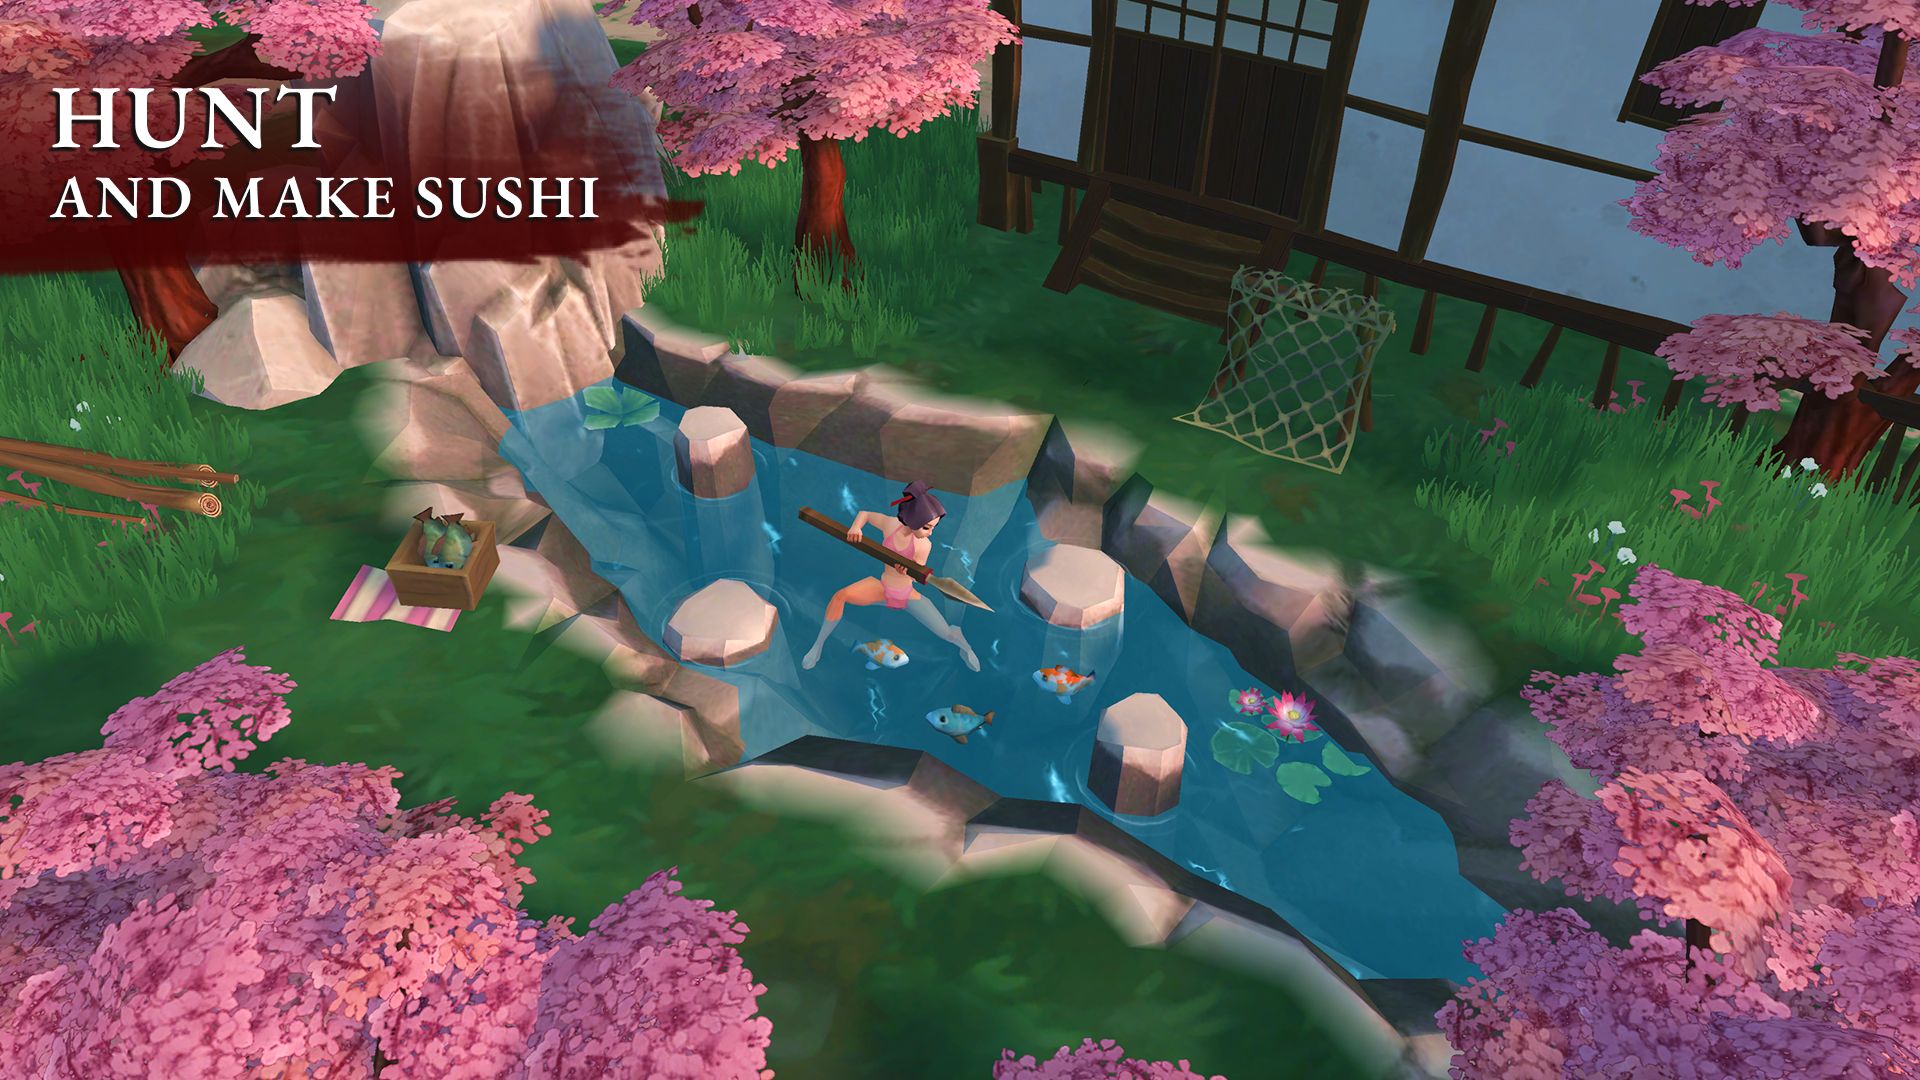 Daisho: Survival of a Samurai - Android game screenshots.